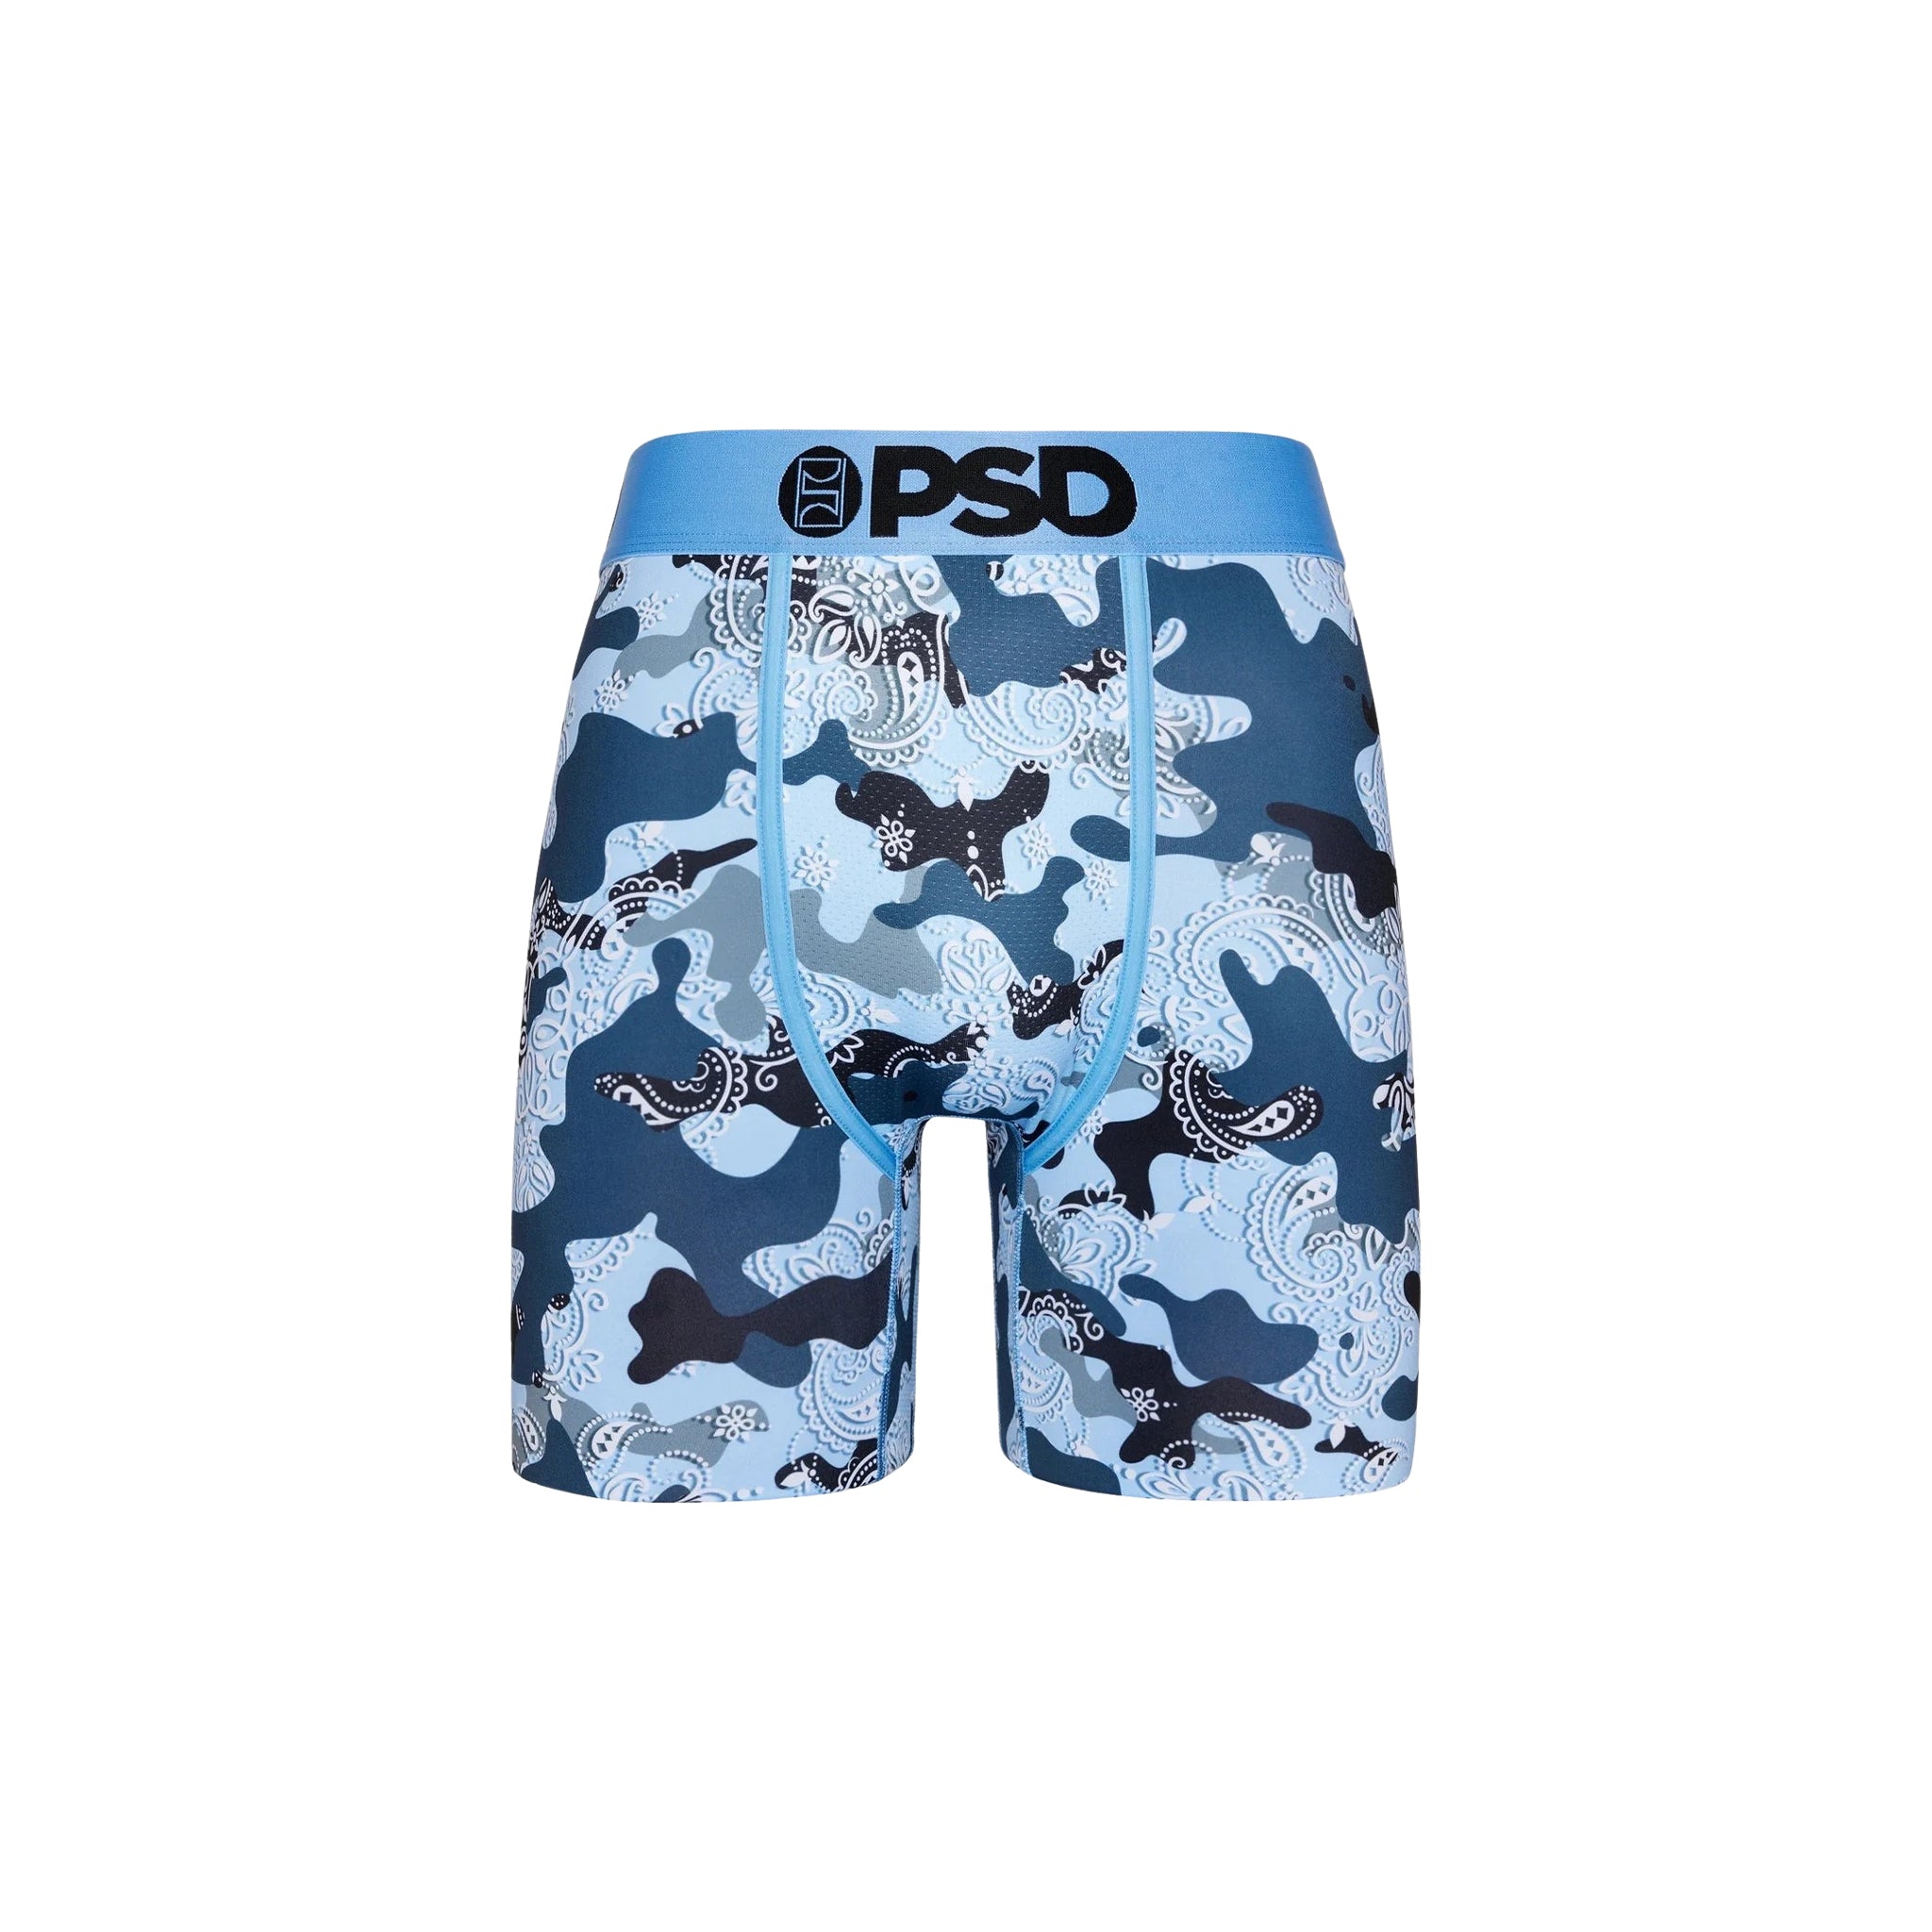 PSD "Icy Paisley" Underwear